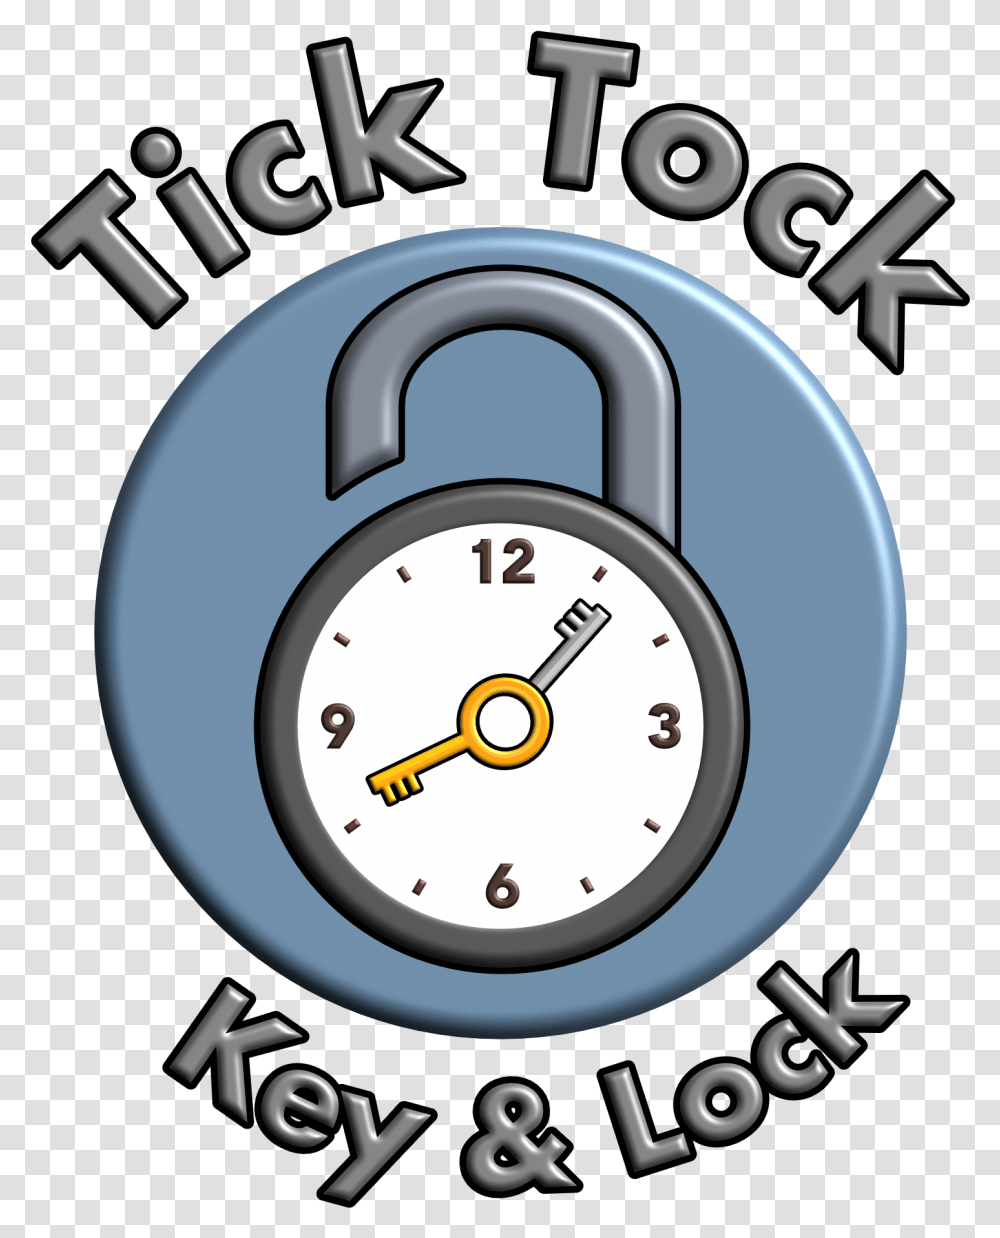 Tick Tock Key Amp Lock, Clock Tower, Architecture, Building, Analog Clock Transparent Png